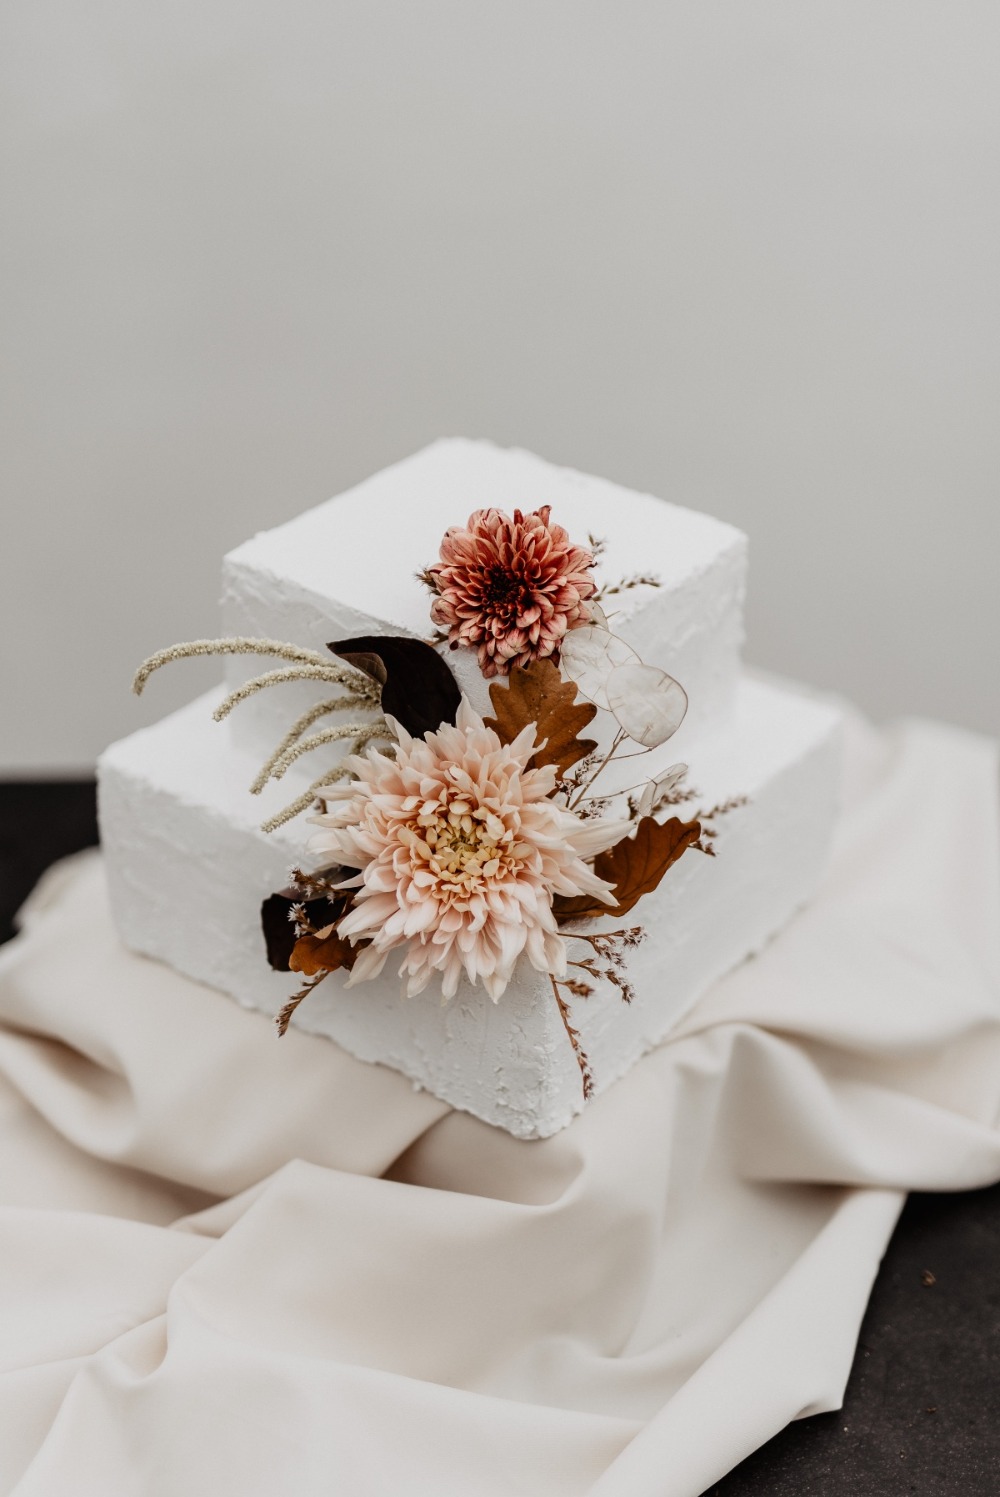 White square wedding cake